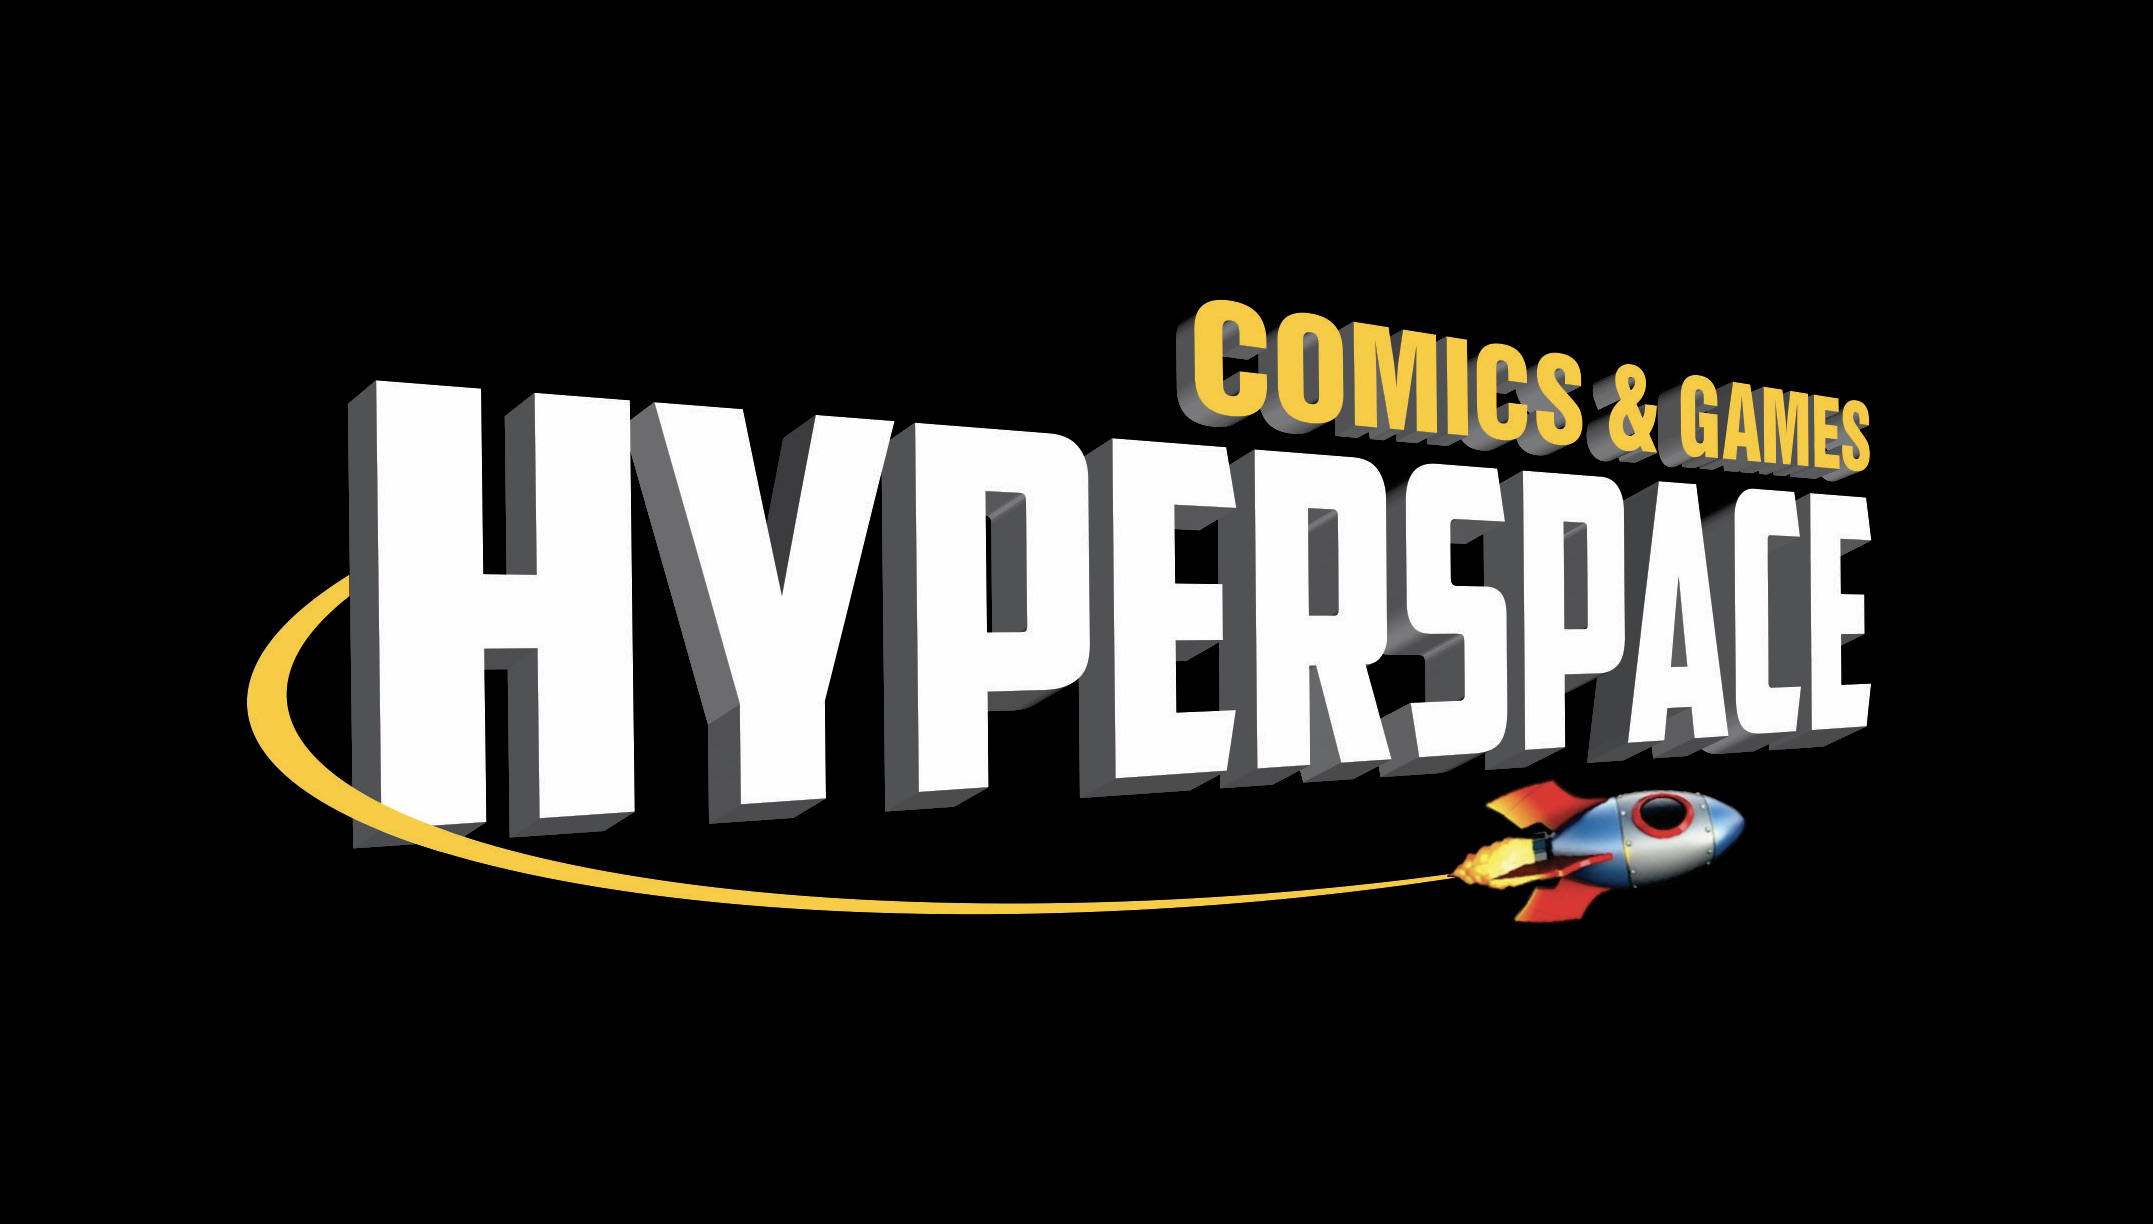 HYPERSPACE COMICS & GAMES